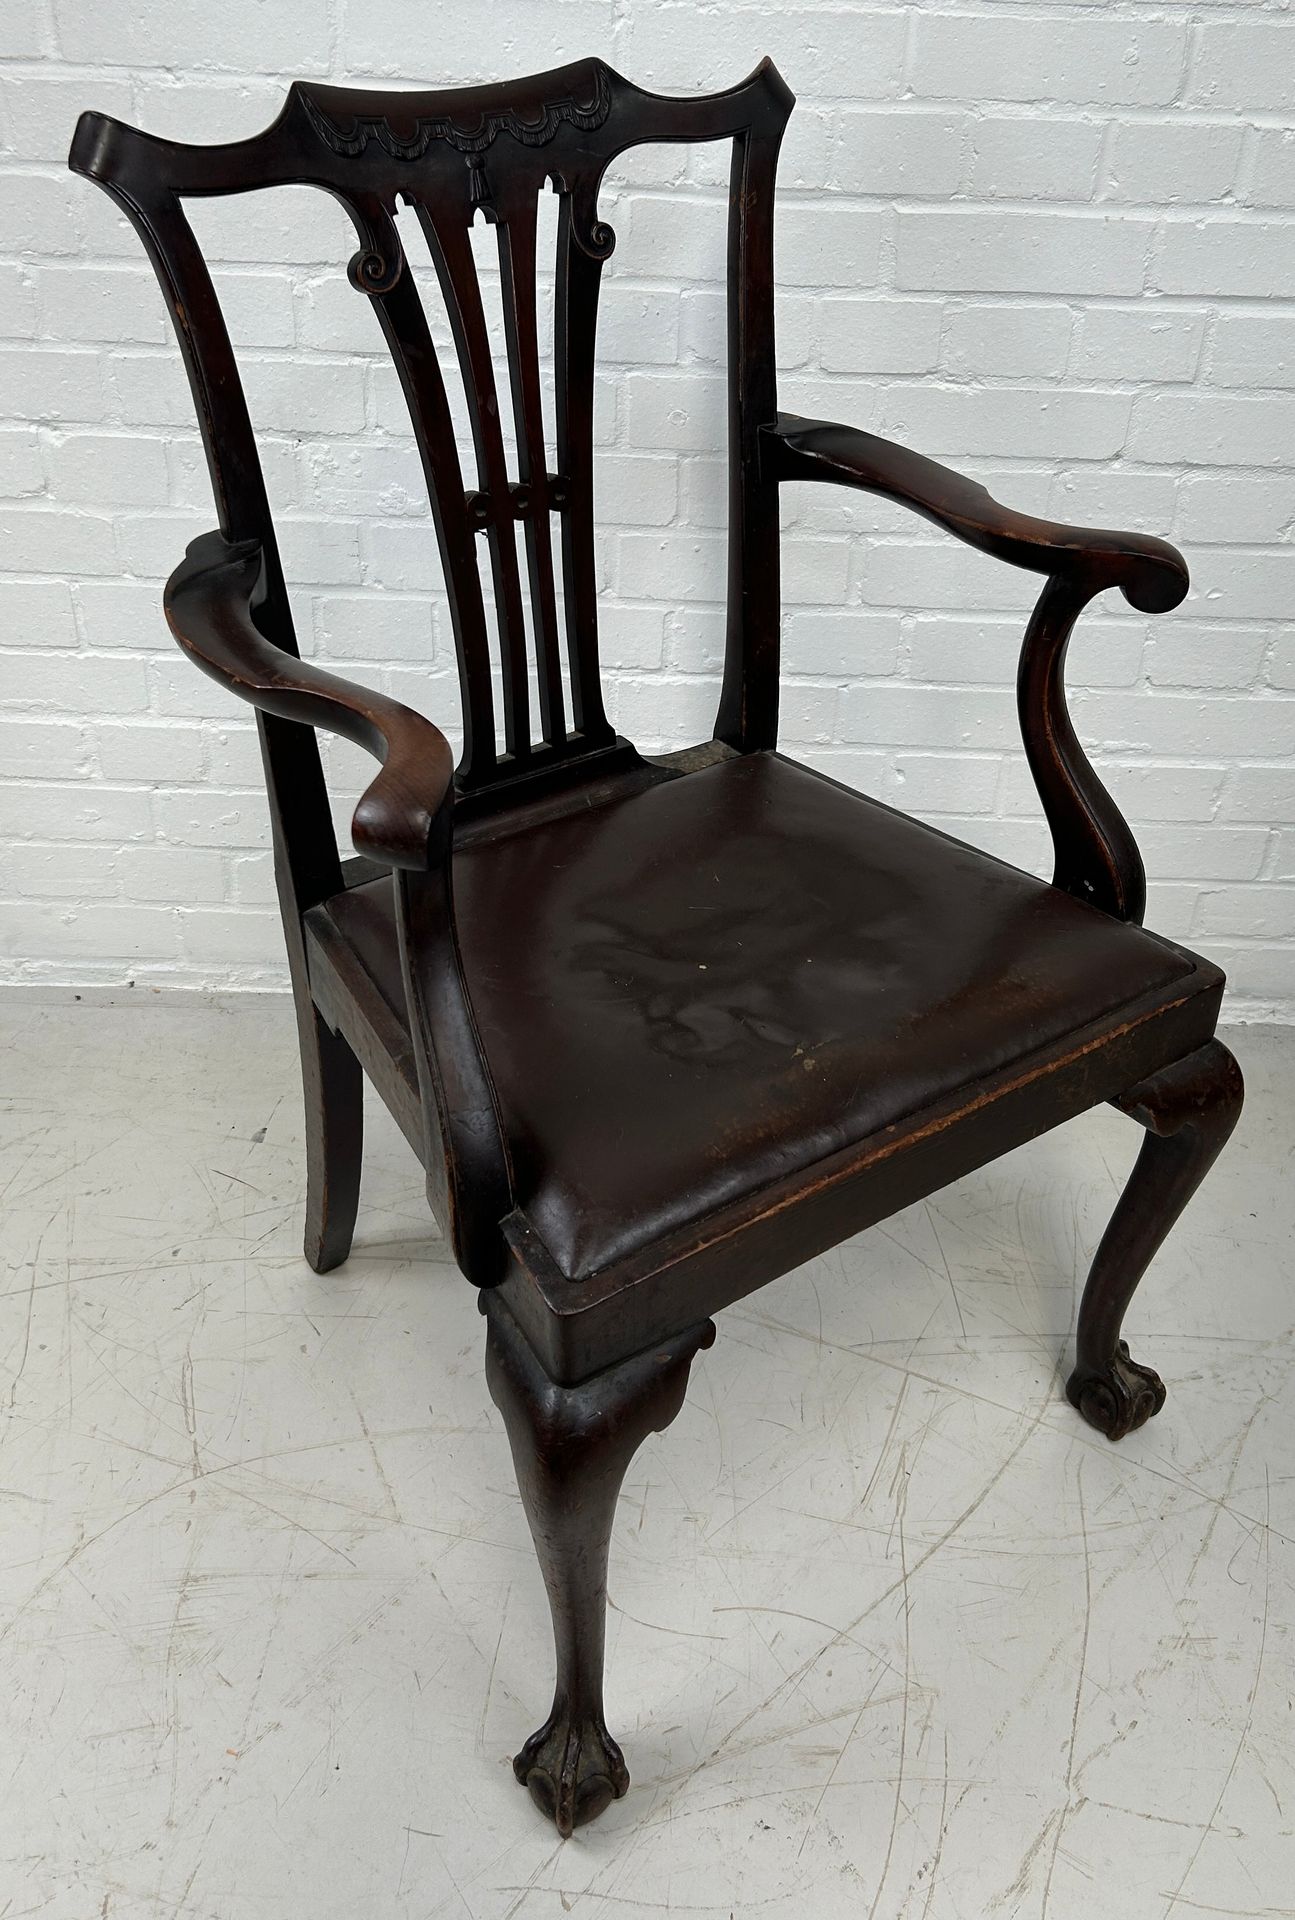 Null 一把齐本德尔设计的办公椅，配有棕色皮座和球爪脚、 

96 厘米 x 60 厘米 x 46 厘米